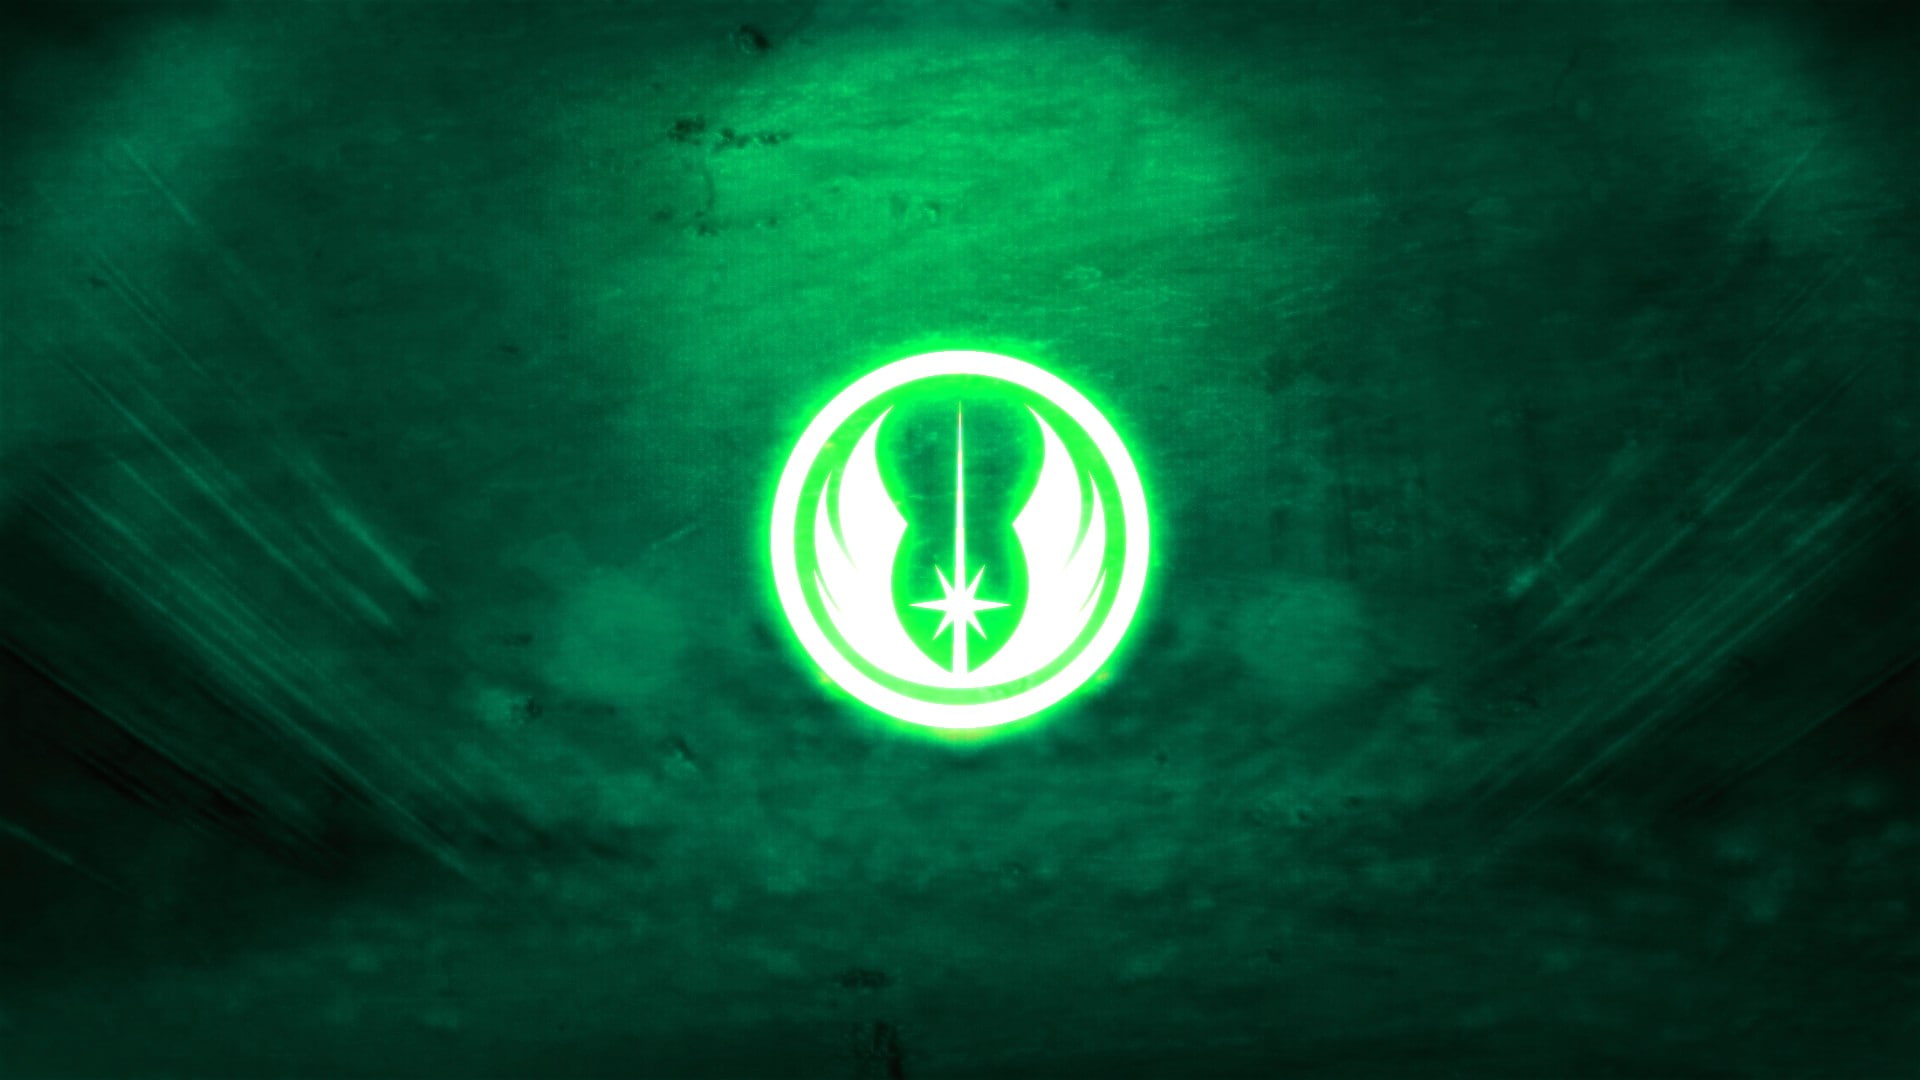 round green logo illustration, Star Wars, illuminated, green color